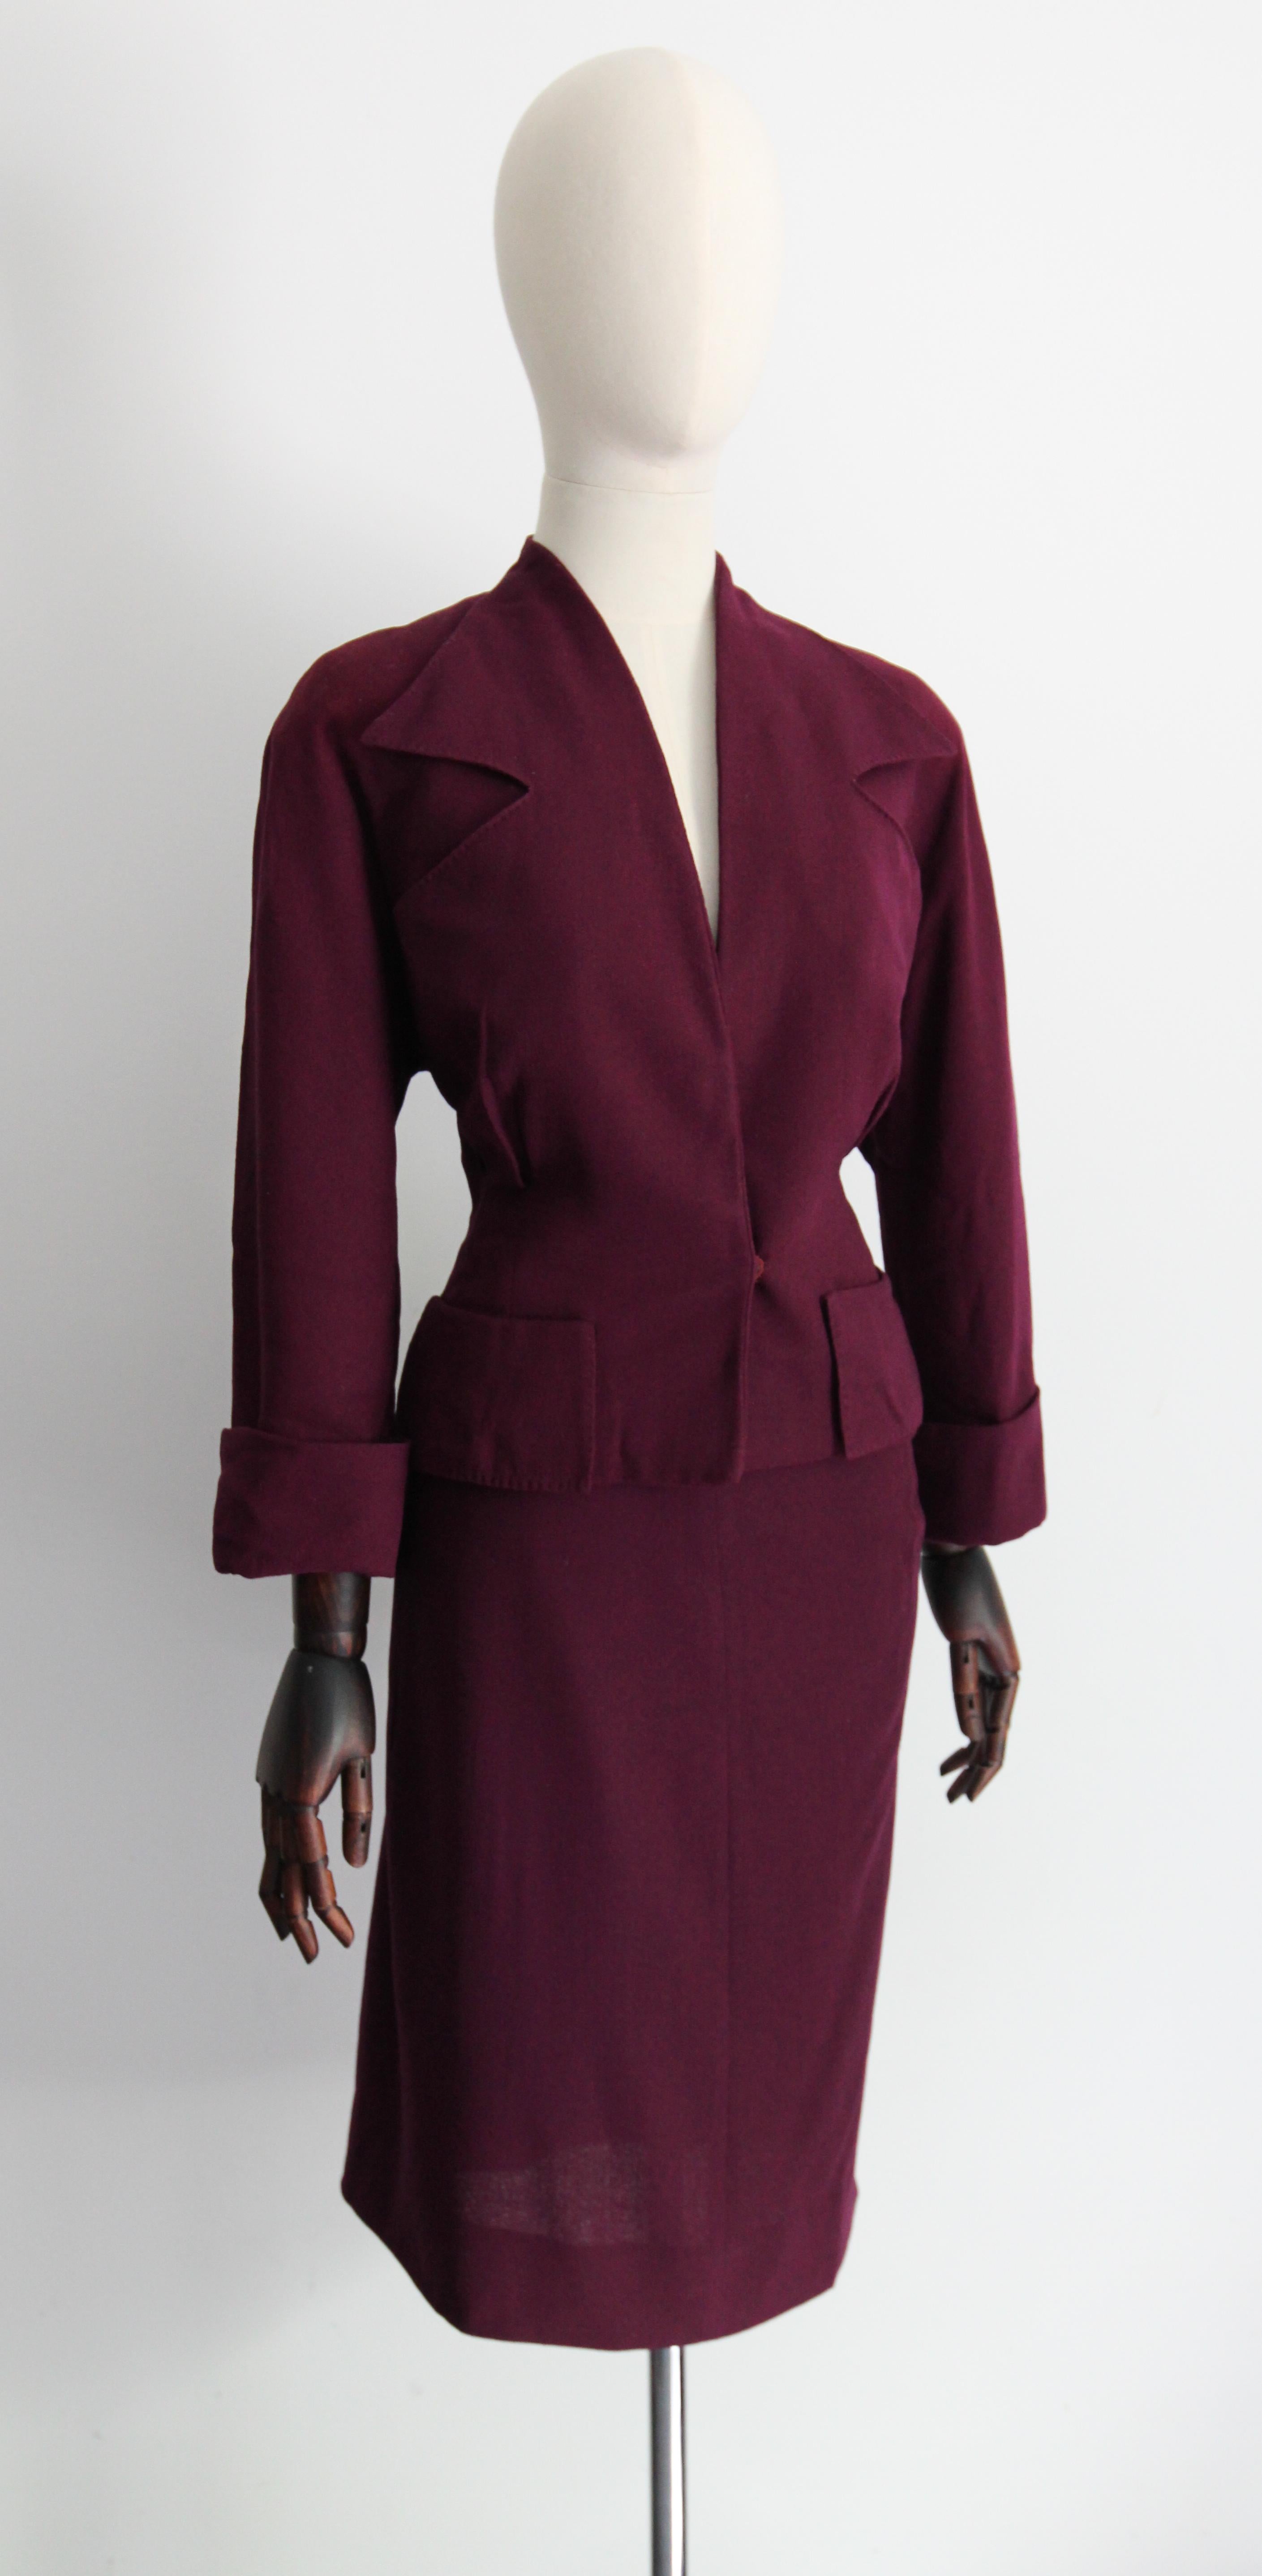 Women's or Men's Vintage 1940's plum wool crepe skirt suit tailored burgundy suit UK 8-10 US 4-6 For Sale